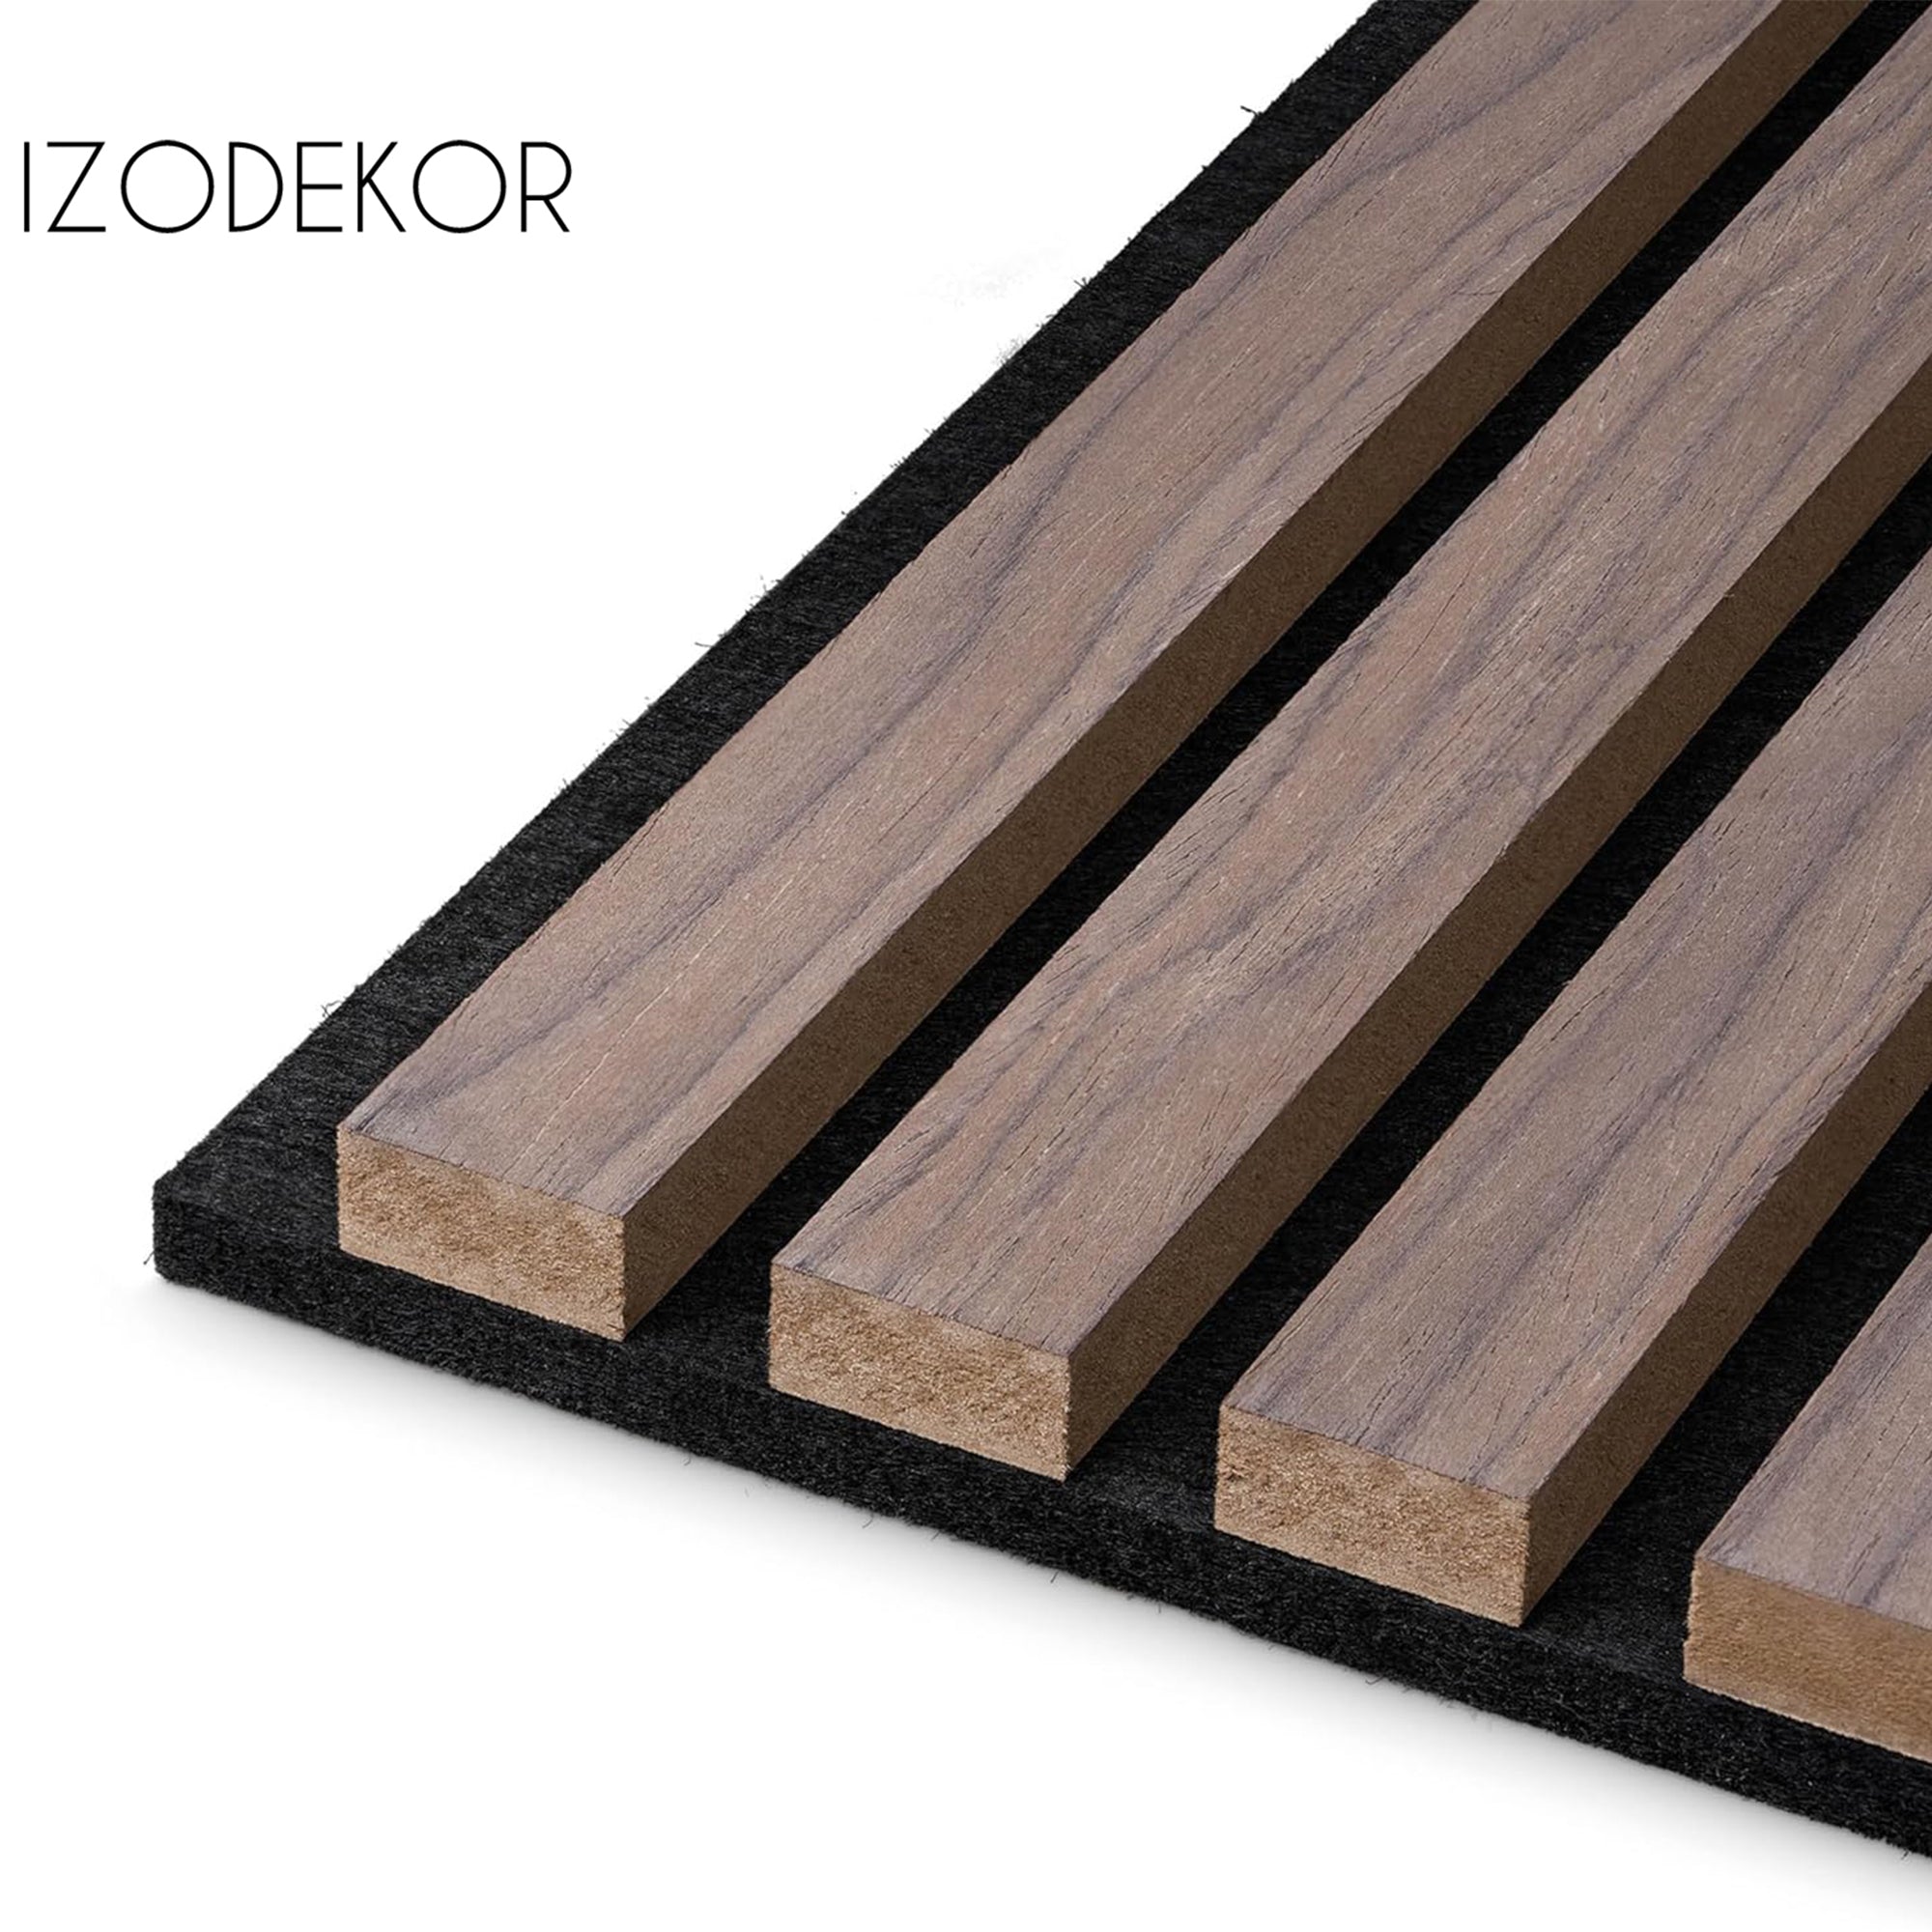 Izodekor Walnut Acoustic Wood Panels 60x60cm